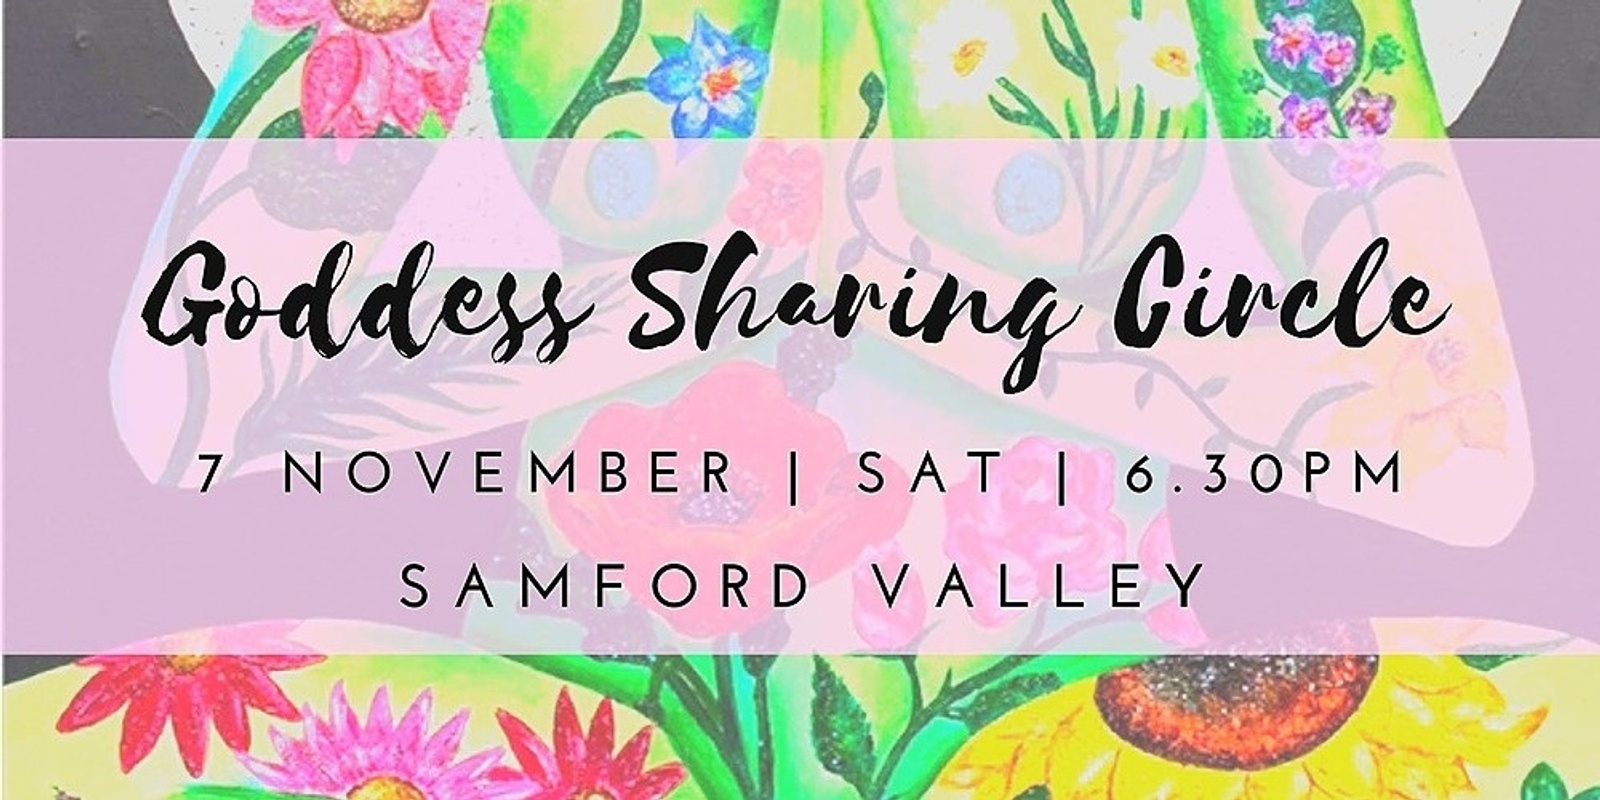 Banner image for Goddess Sharing Circle - November 2020